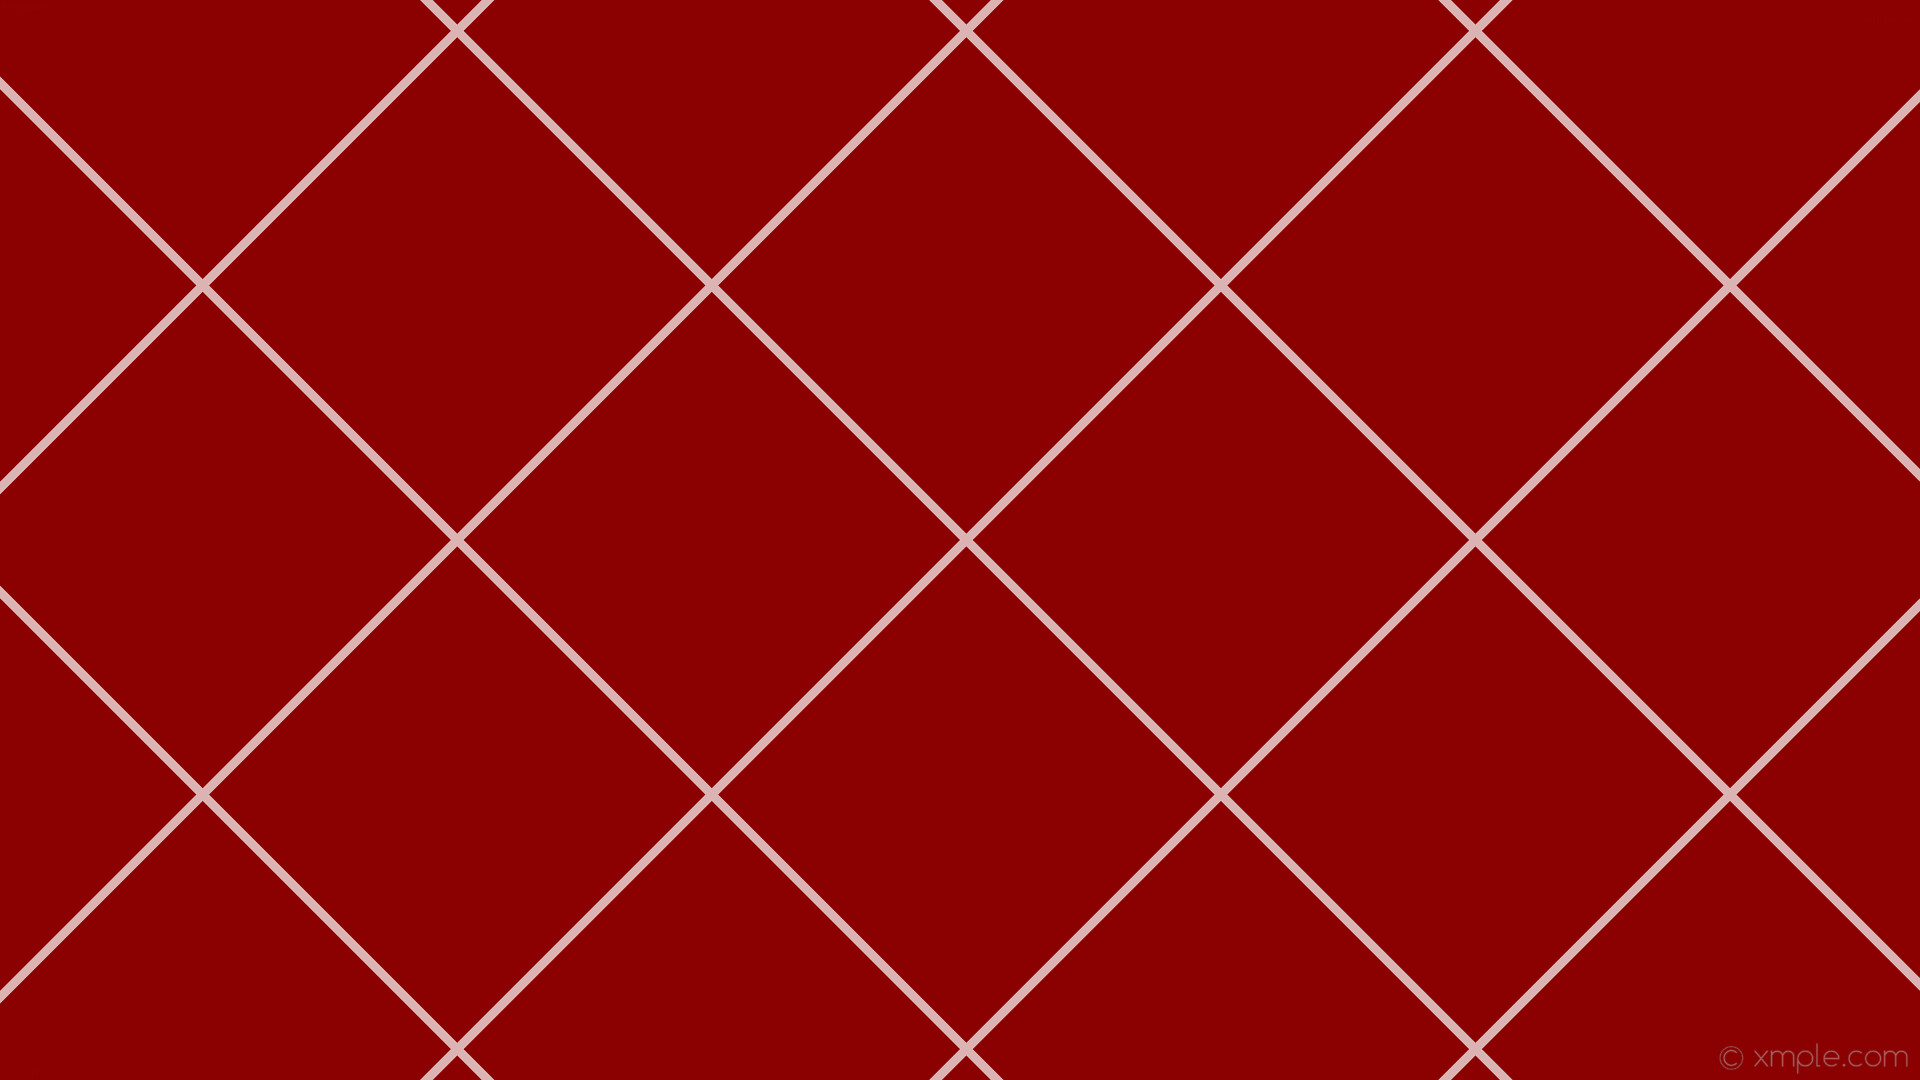 1920x1080 wallpaper graph paper grid red white dark red #8b0000 #ffffff 45Â° 9px 360px